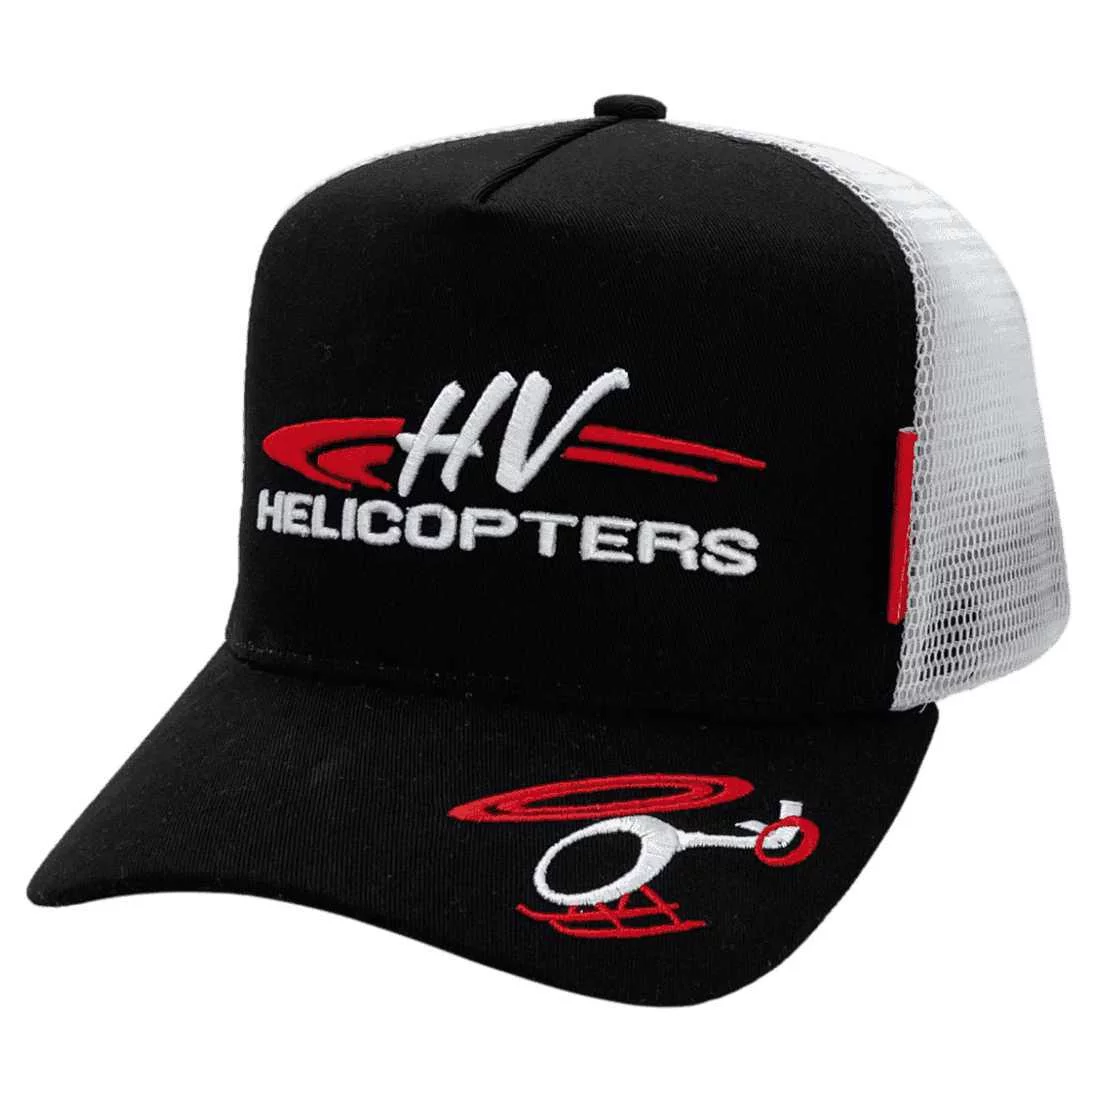 Hunter Valley Helicopters Pokolbin NSW HP Original Basic Aussie Trucker Hats with Australian Head Size Crown